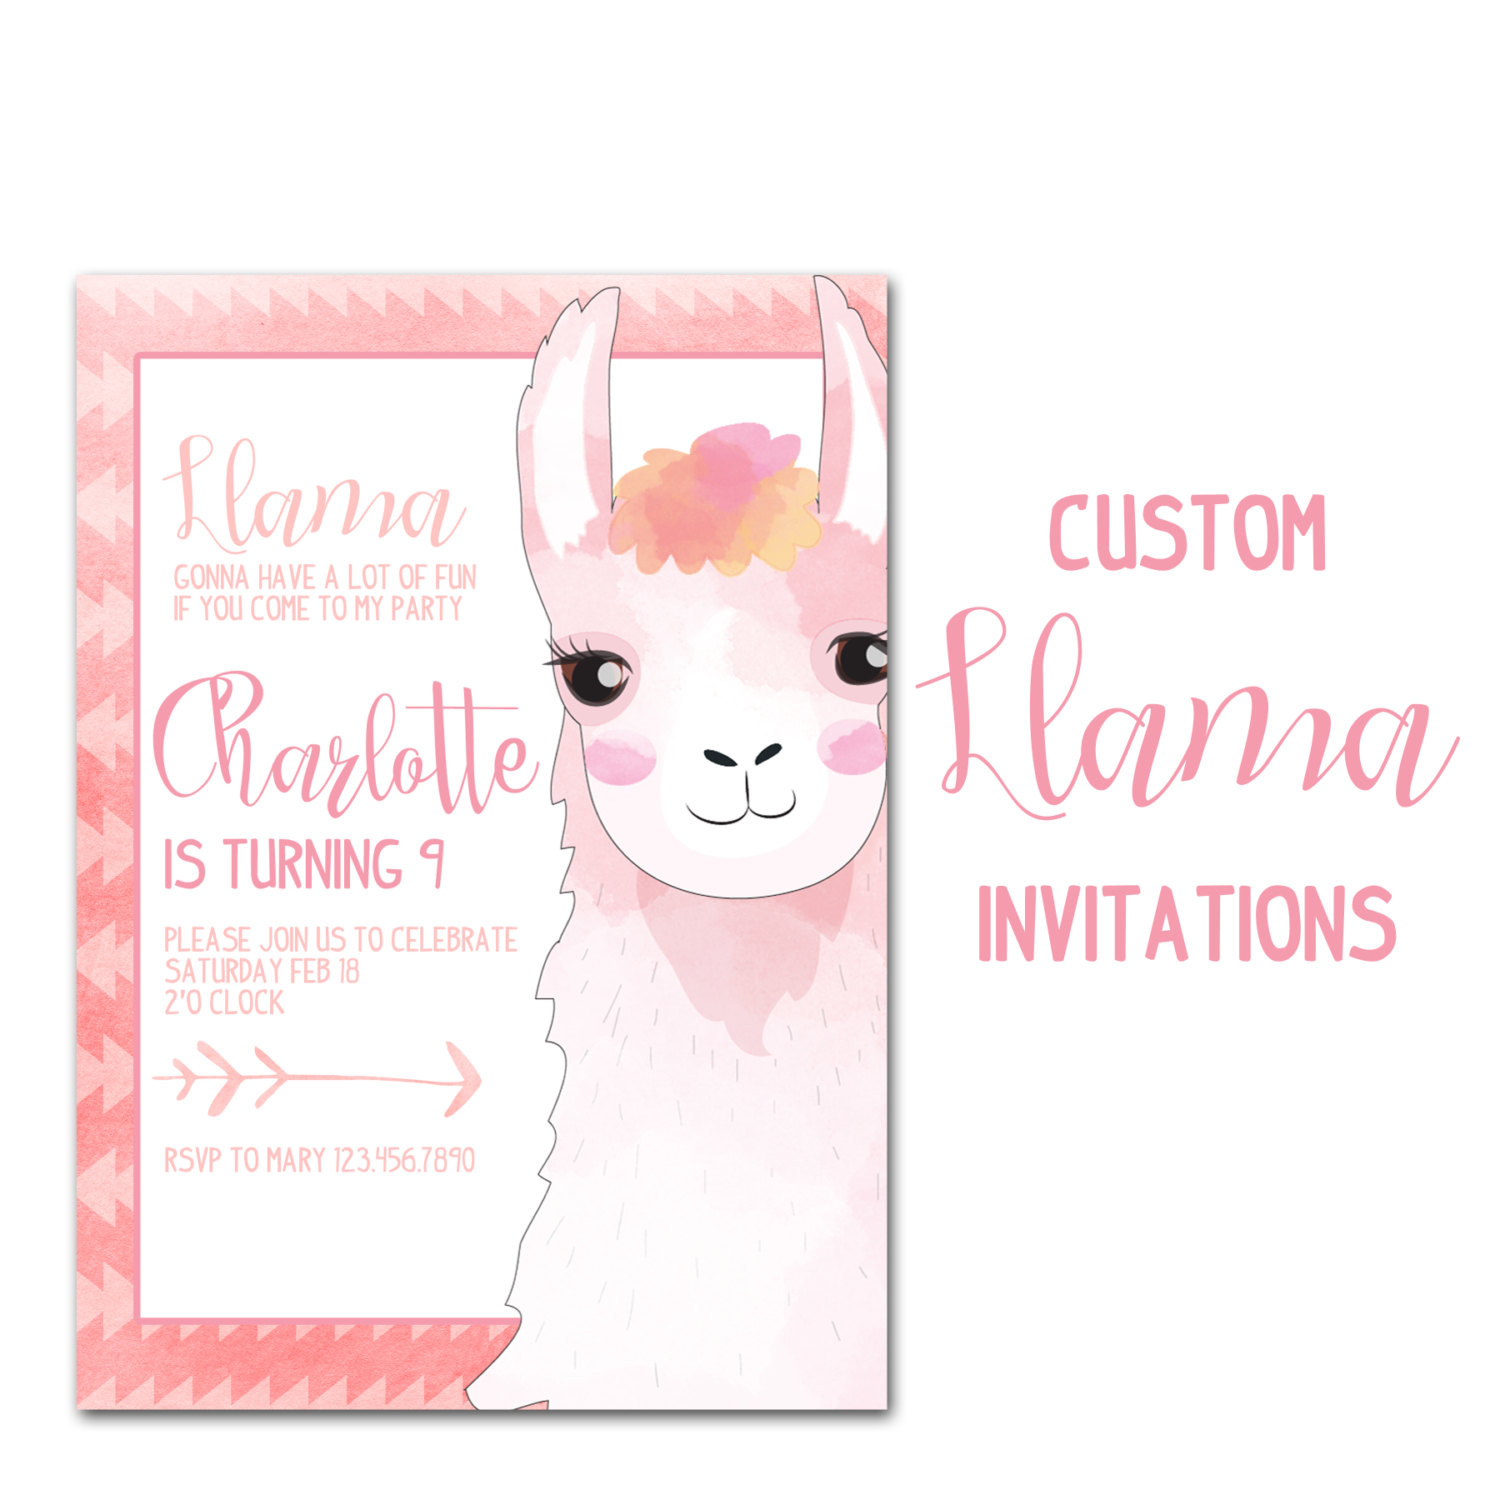 Best ideas about Custom Birthday Party Invitations
. Save or Pin Llama Birthday Party Invitation Custom Animal Birthday Now.